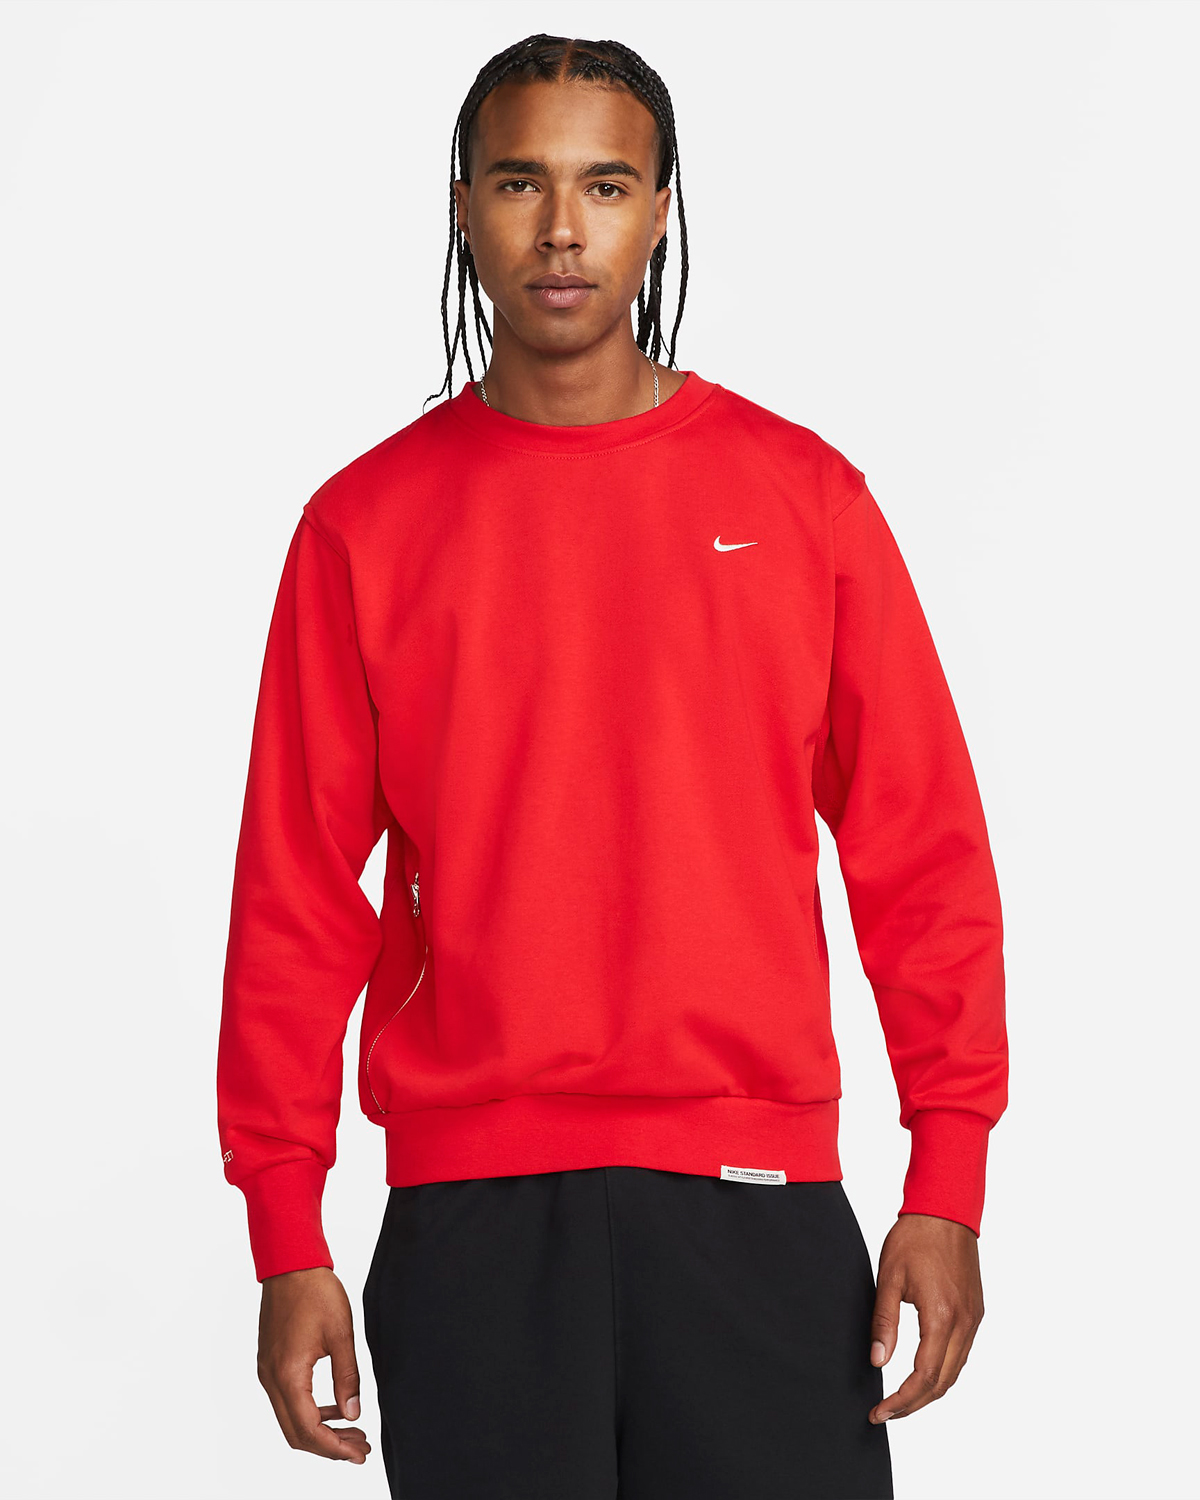 Nike-Standard-Issue-Basketball-Sweatshirt-University-Red